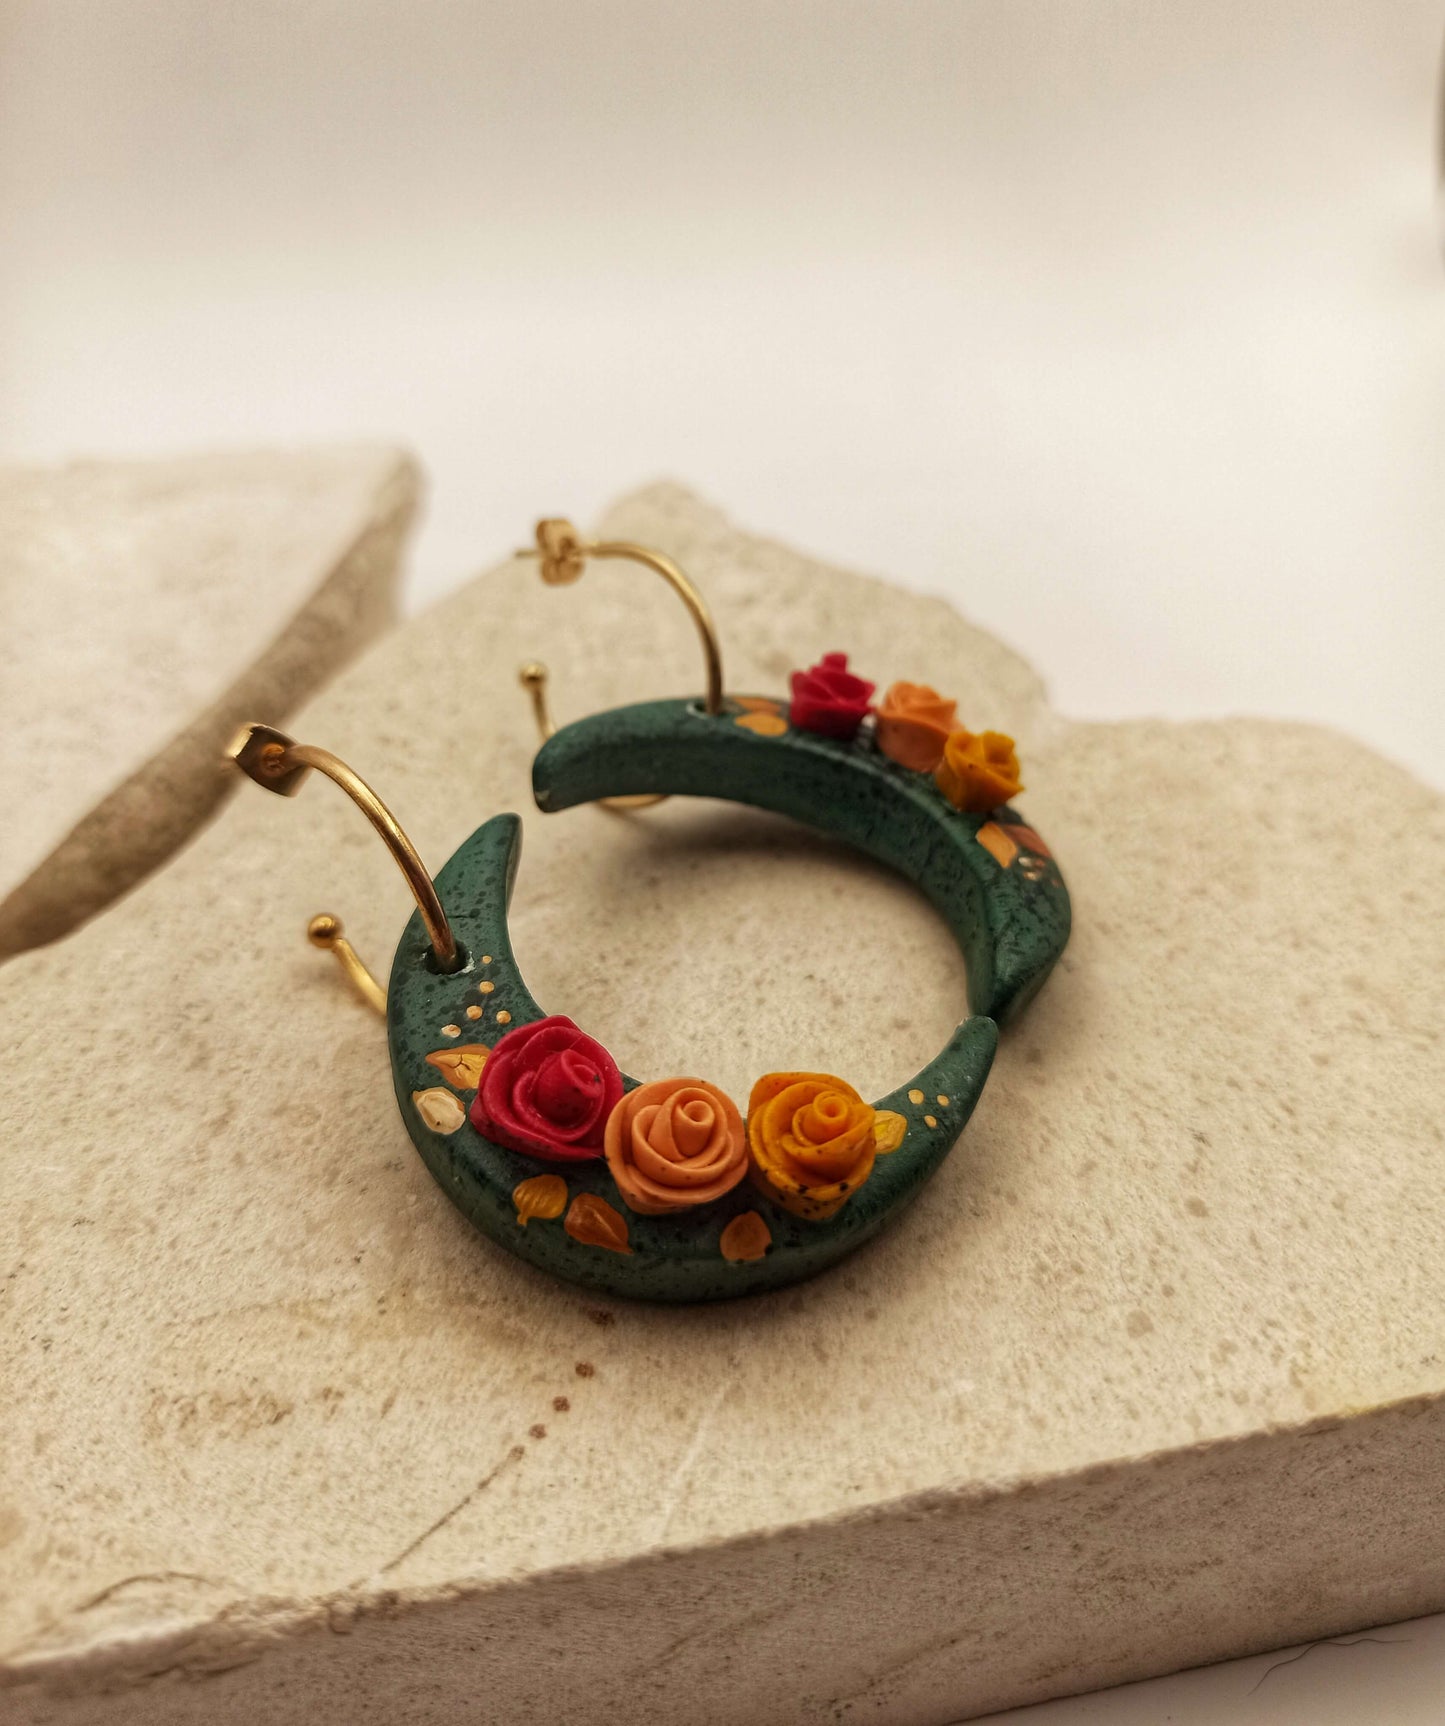 Celestial clay hand-made earrings